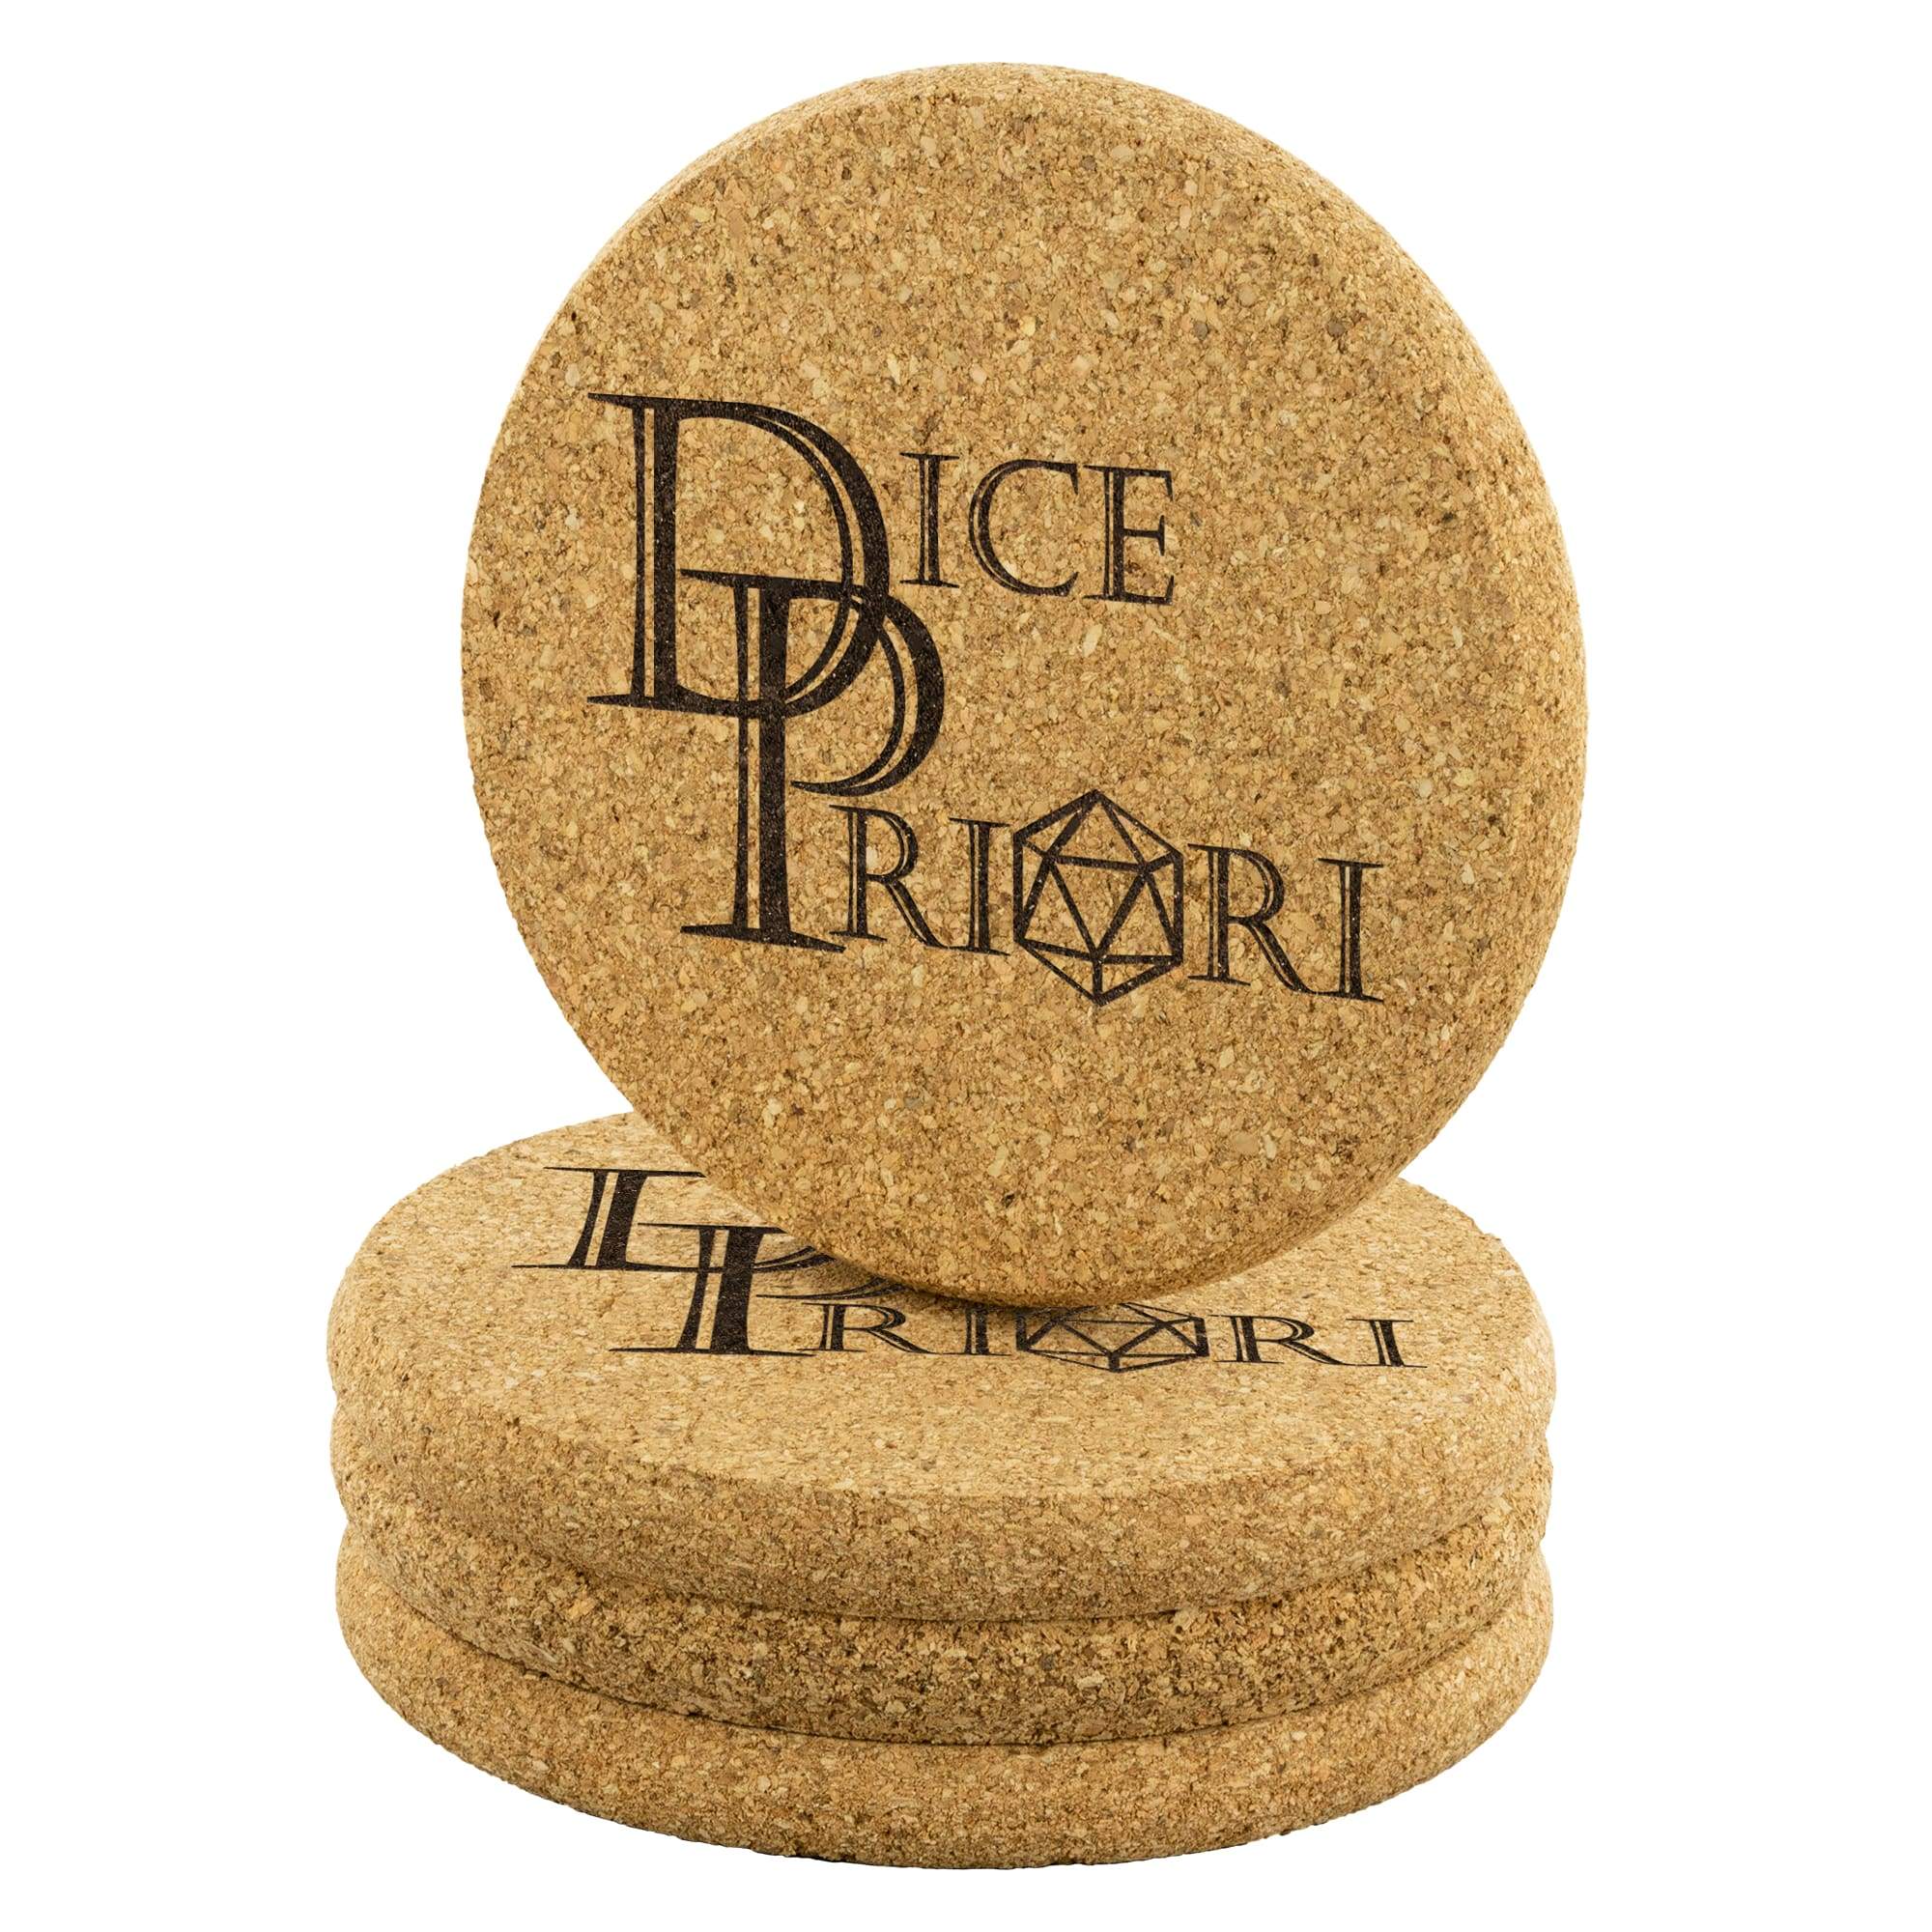 Dice Priori Classic Text Logo Round Cork Coaster (Set of 4) - Coasters